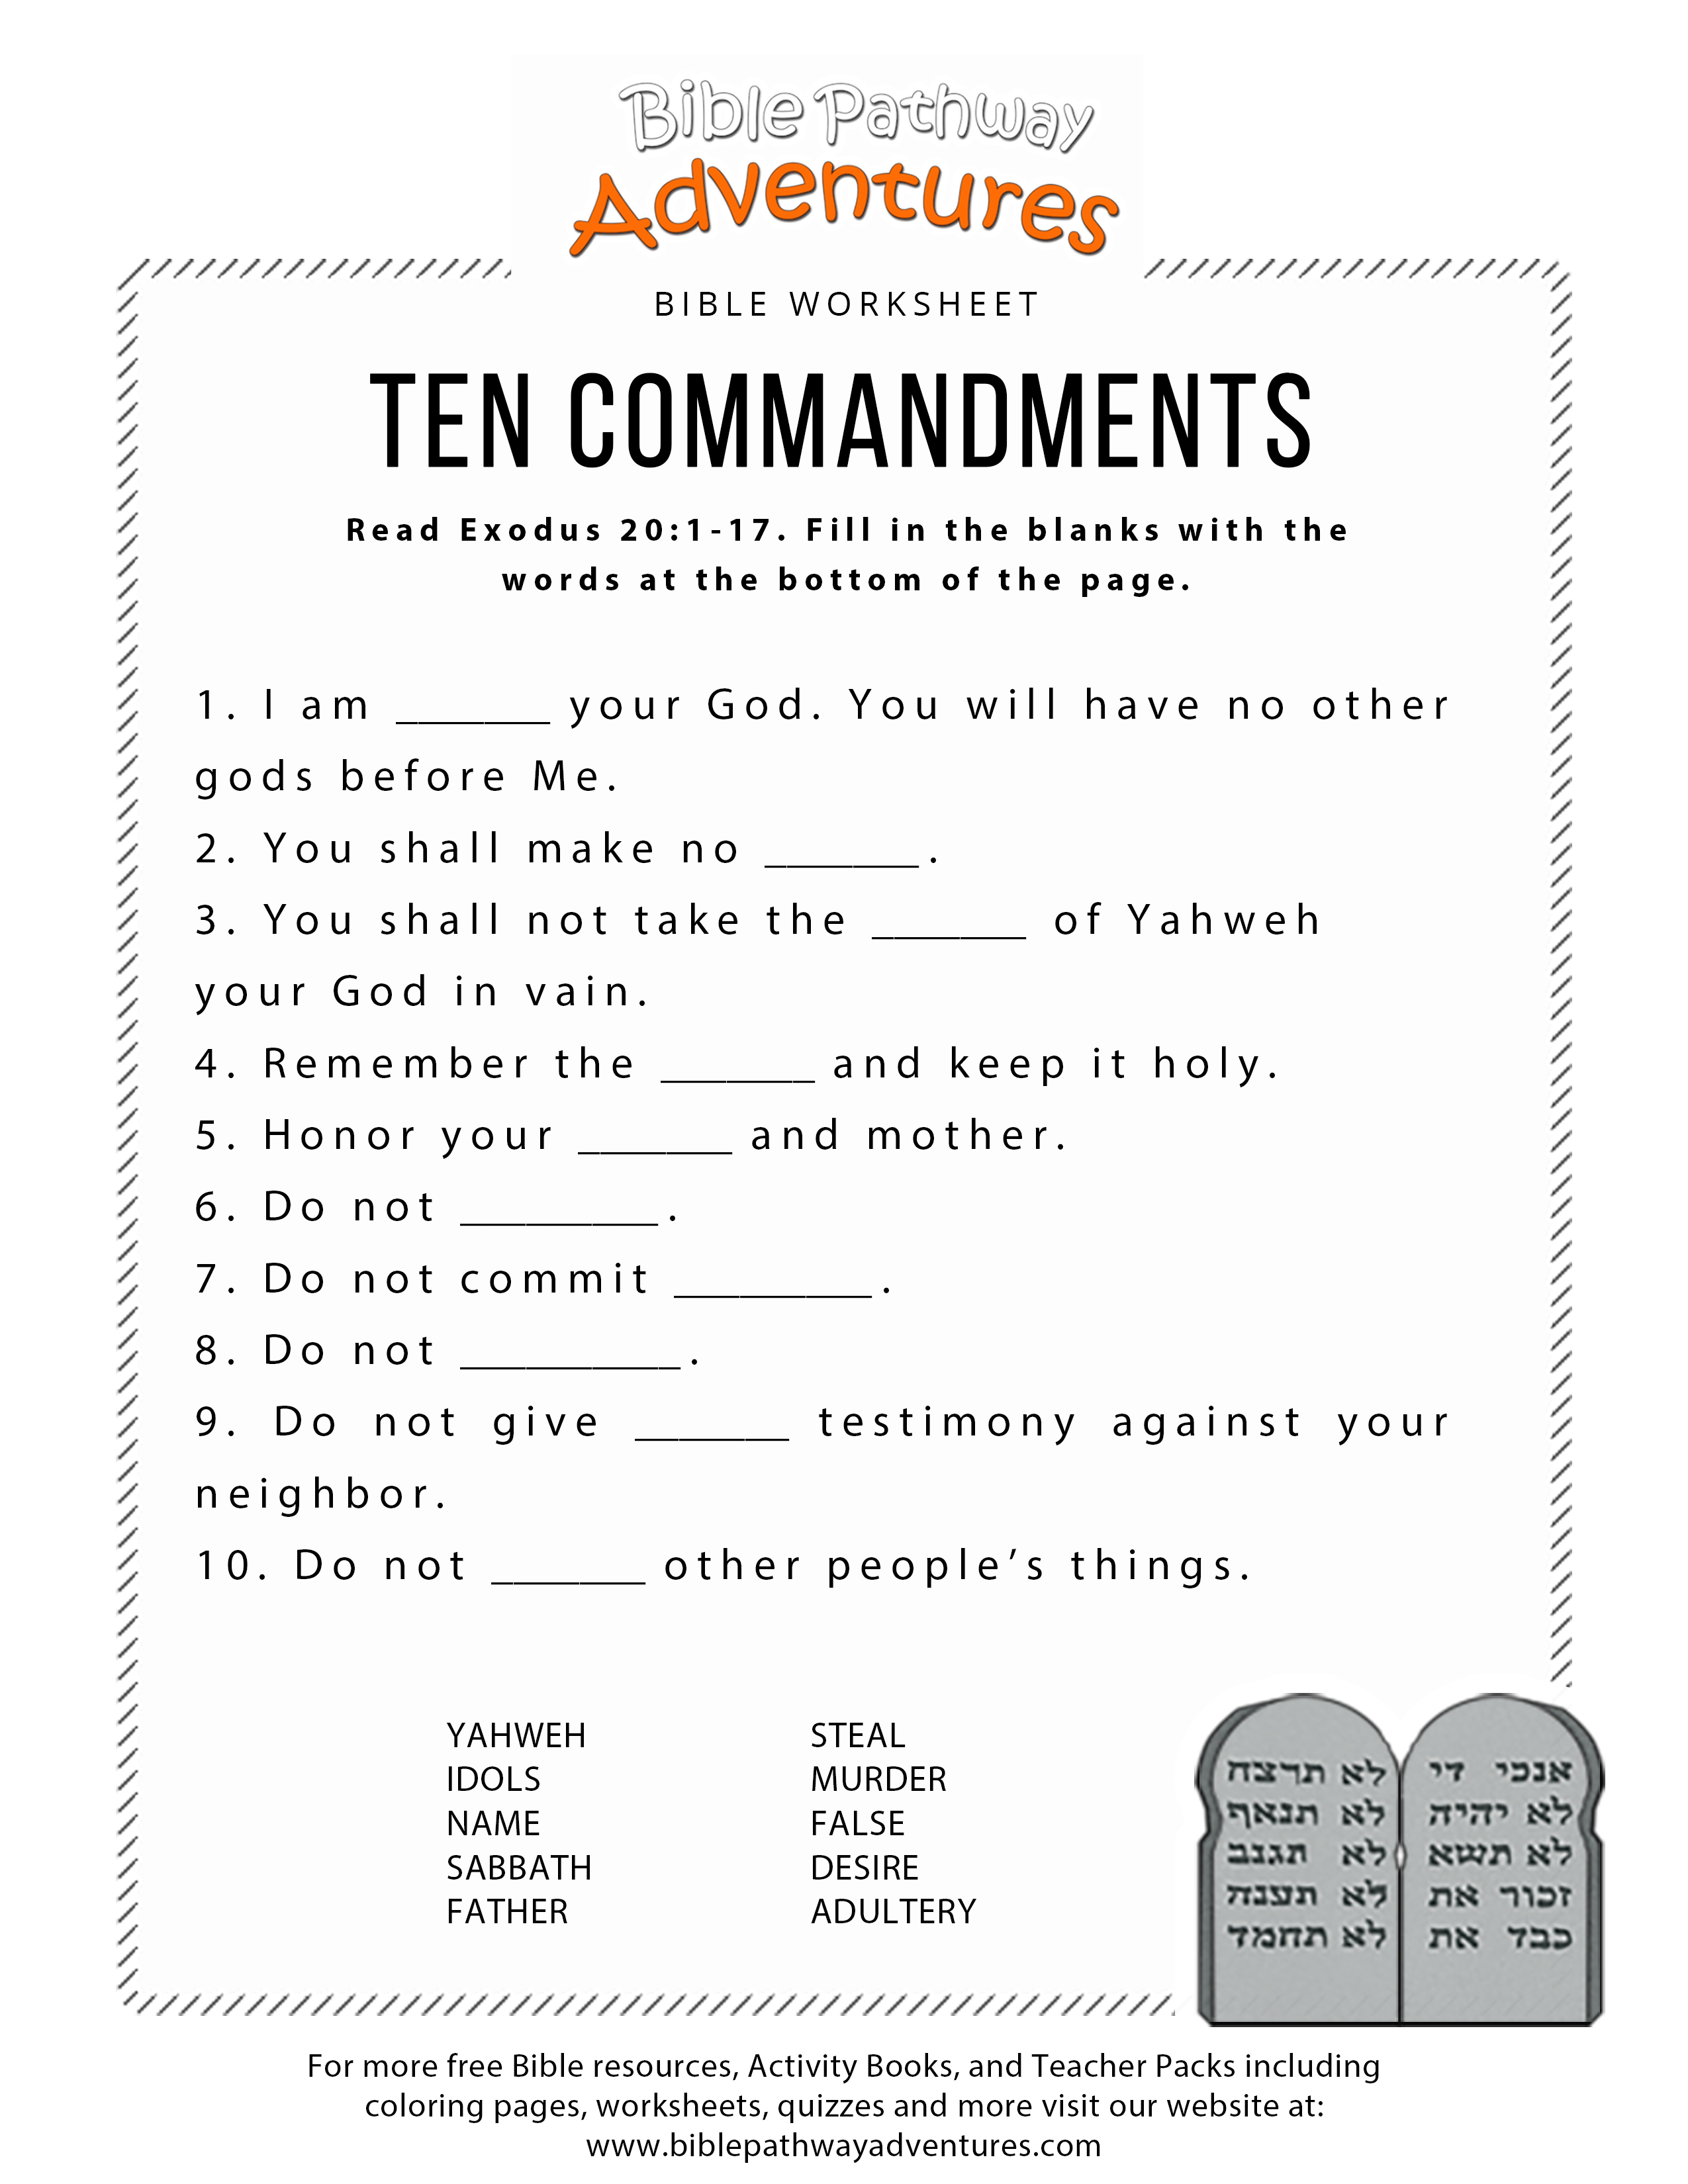 Ten Commandments Worksheet For Kids - Free Printable Bible Games For Kids